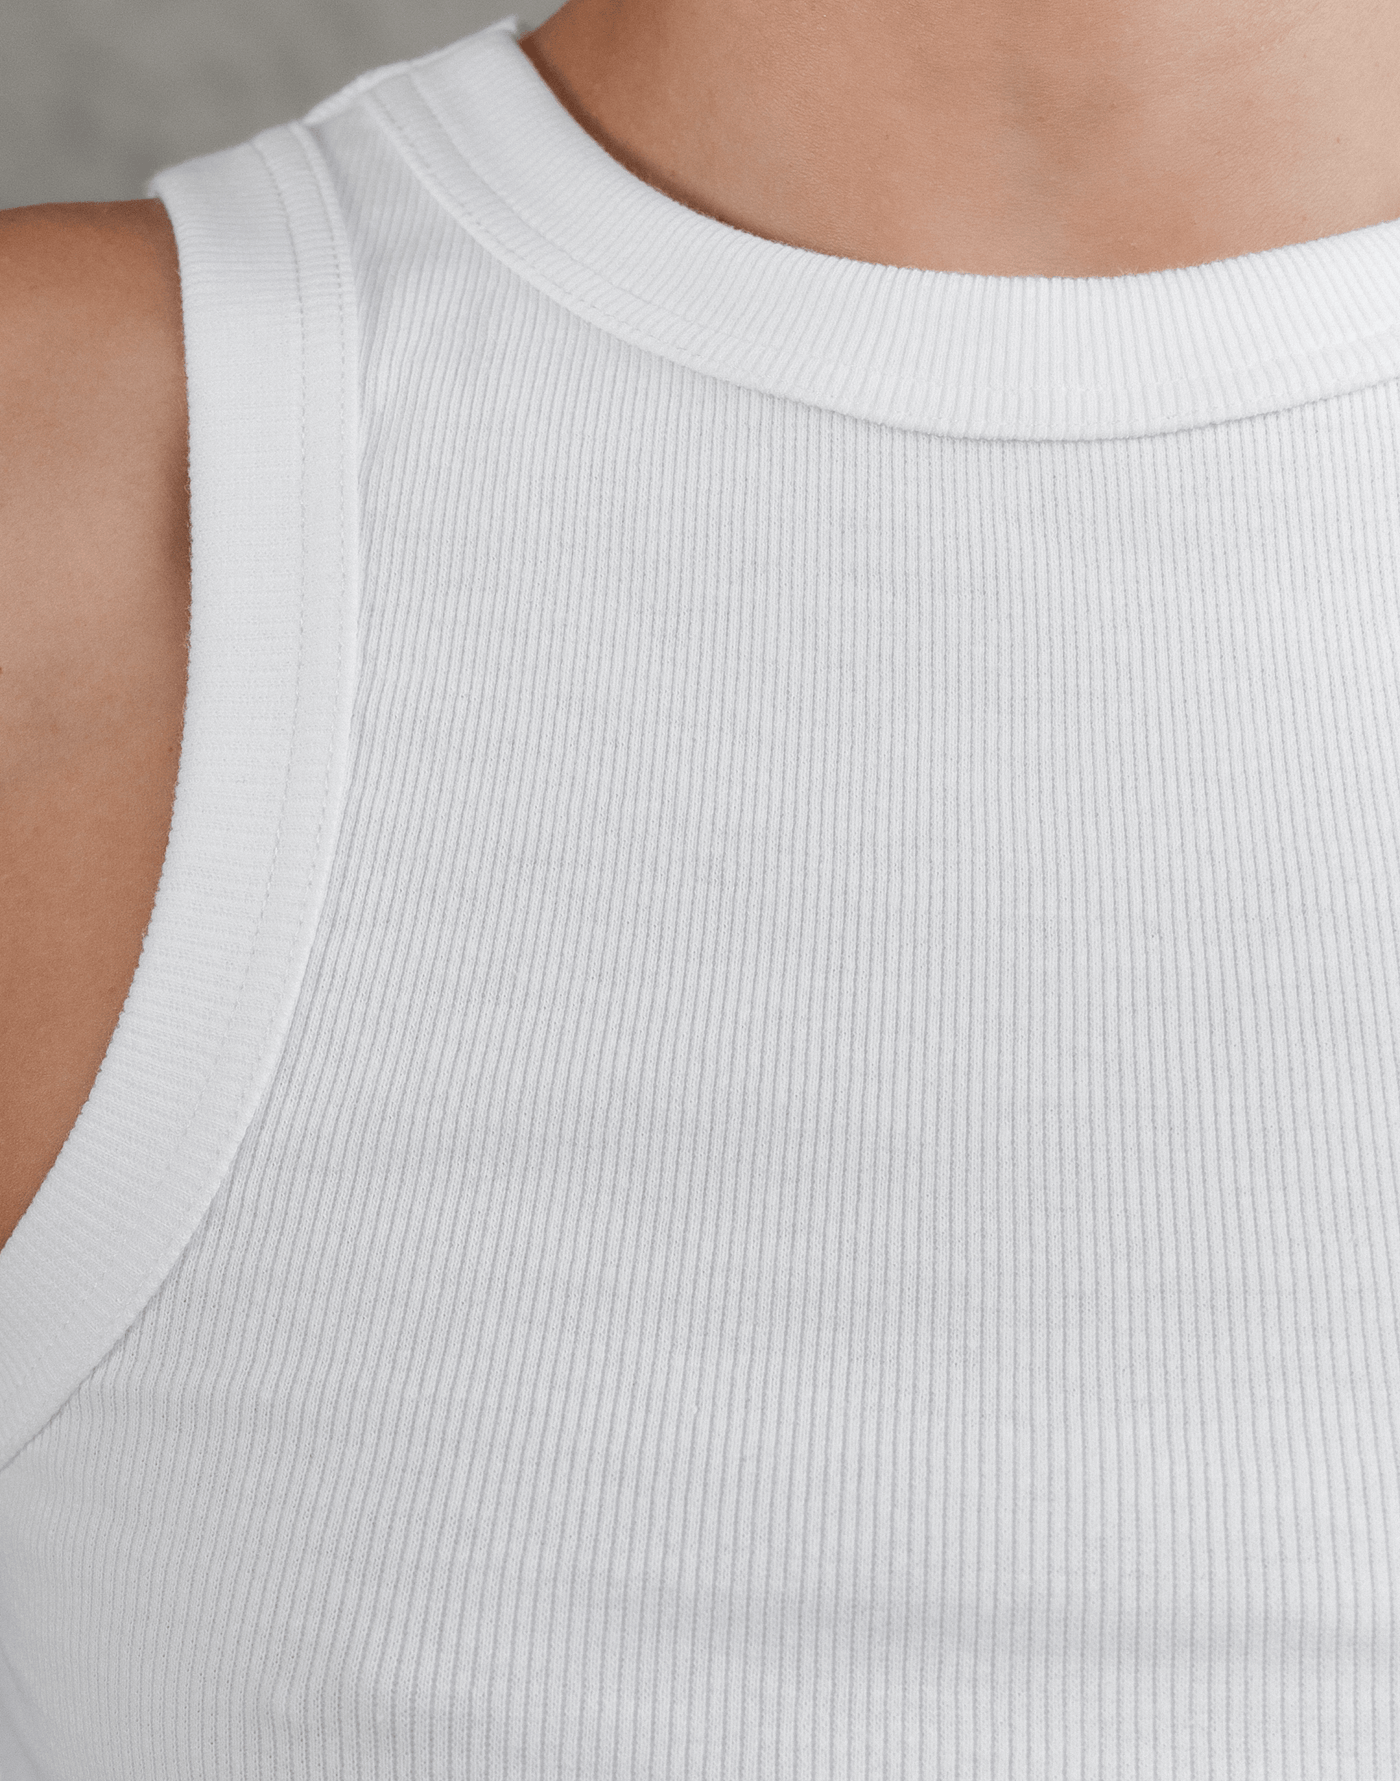 Kaia Rib Tank (White) - Tank Top - Women's Tops - Charcoal Clothing